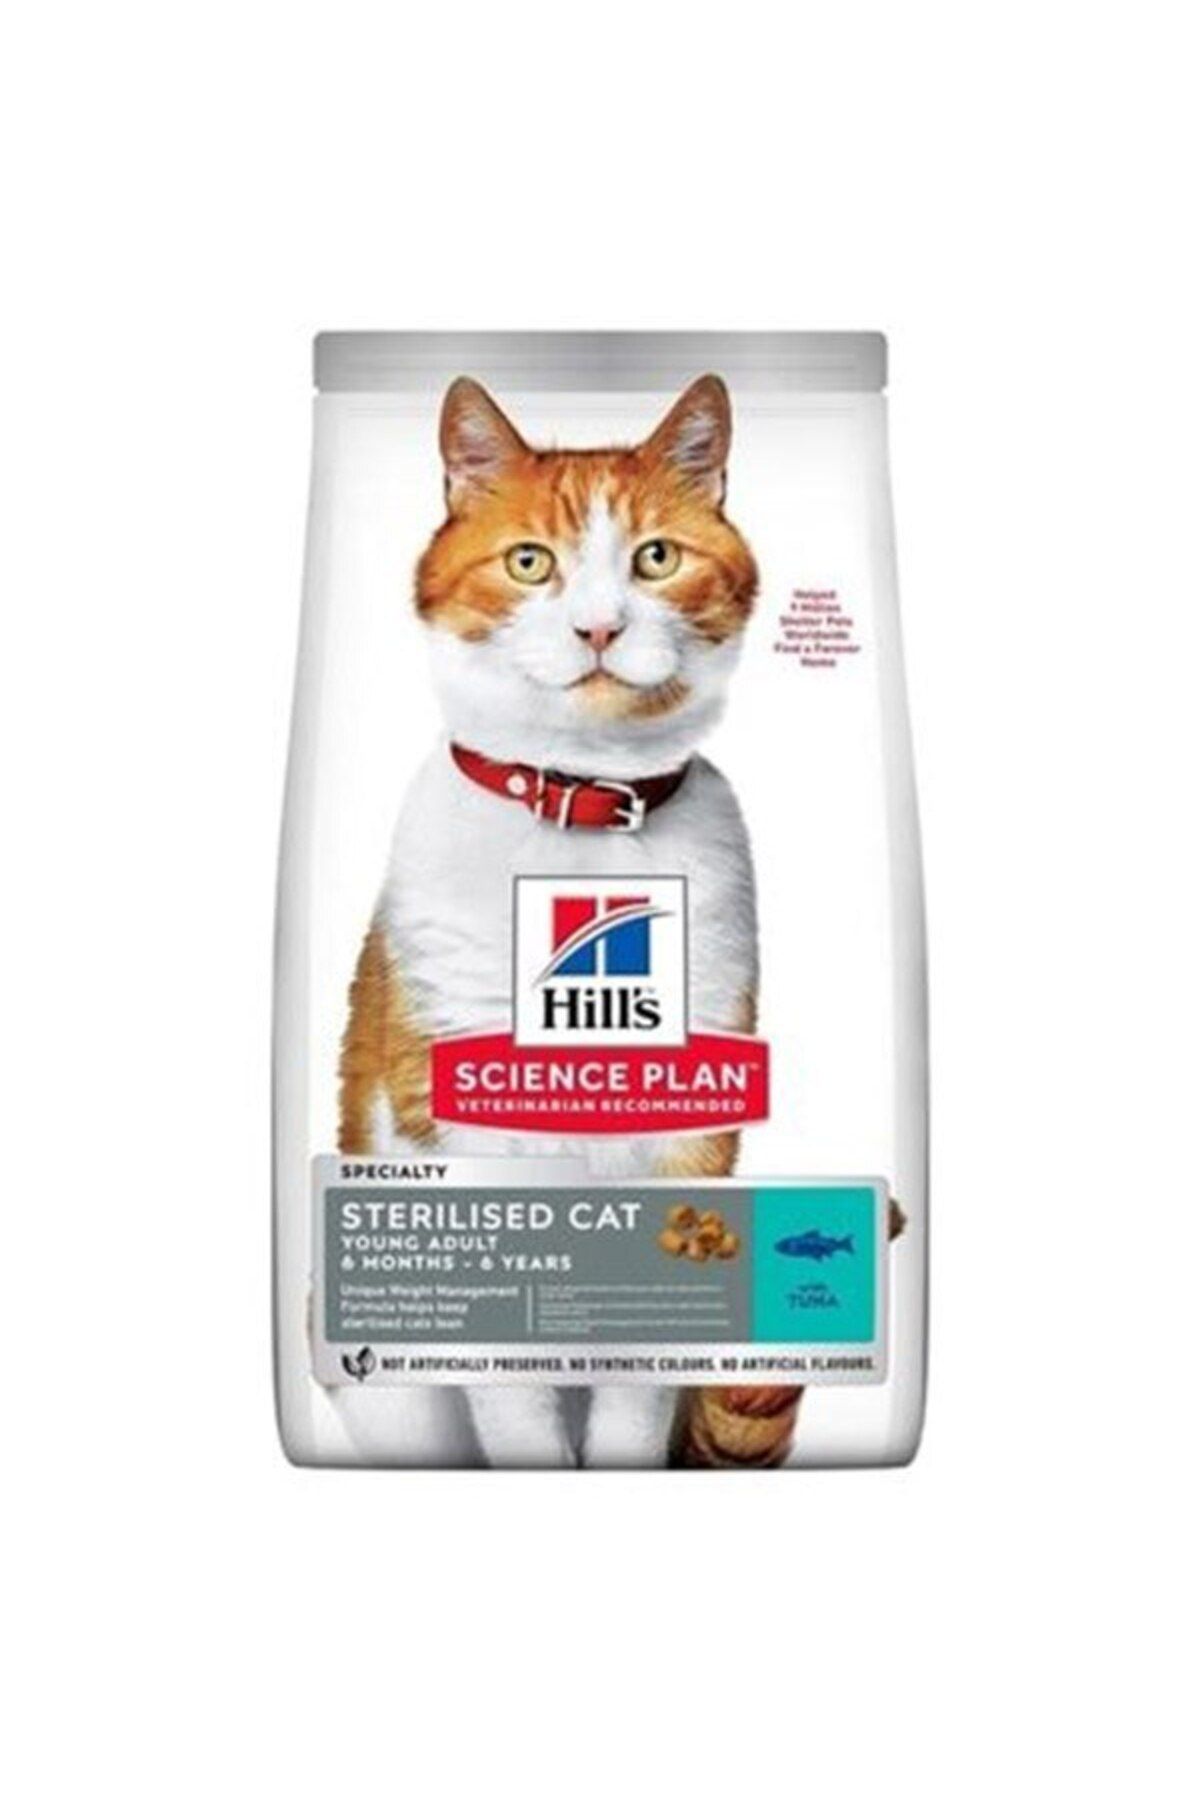 Hills Science Plan Hills Sterilised Tuna Balıklı Kısır Kedi Maması 10 Kg